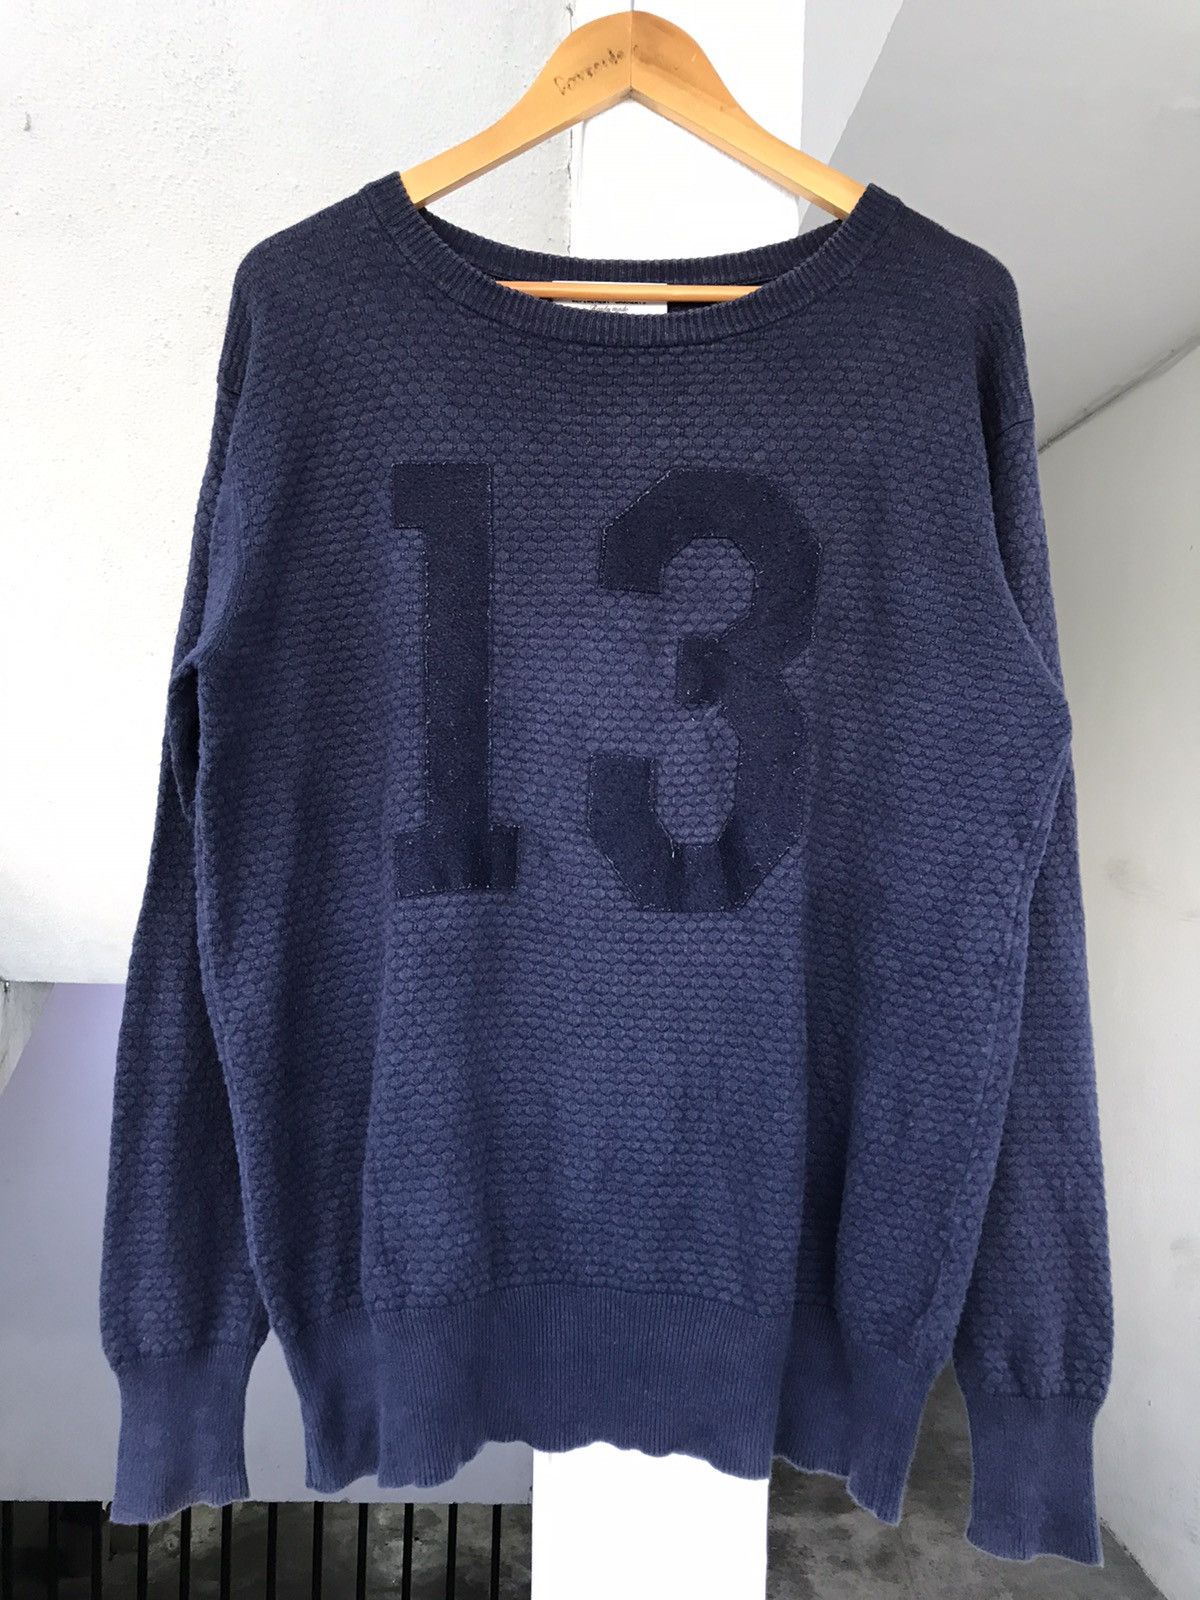 Unused Unused Refinement Garments 13 Sweatshirt | Grailed